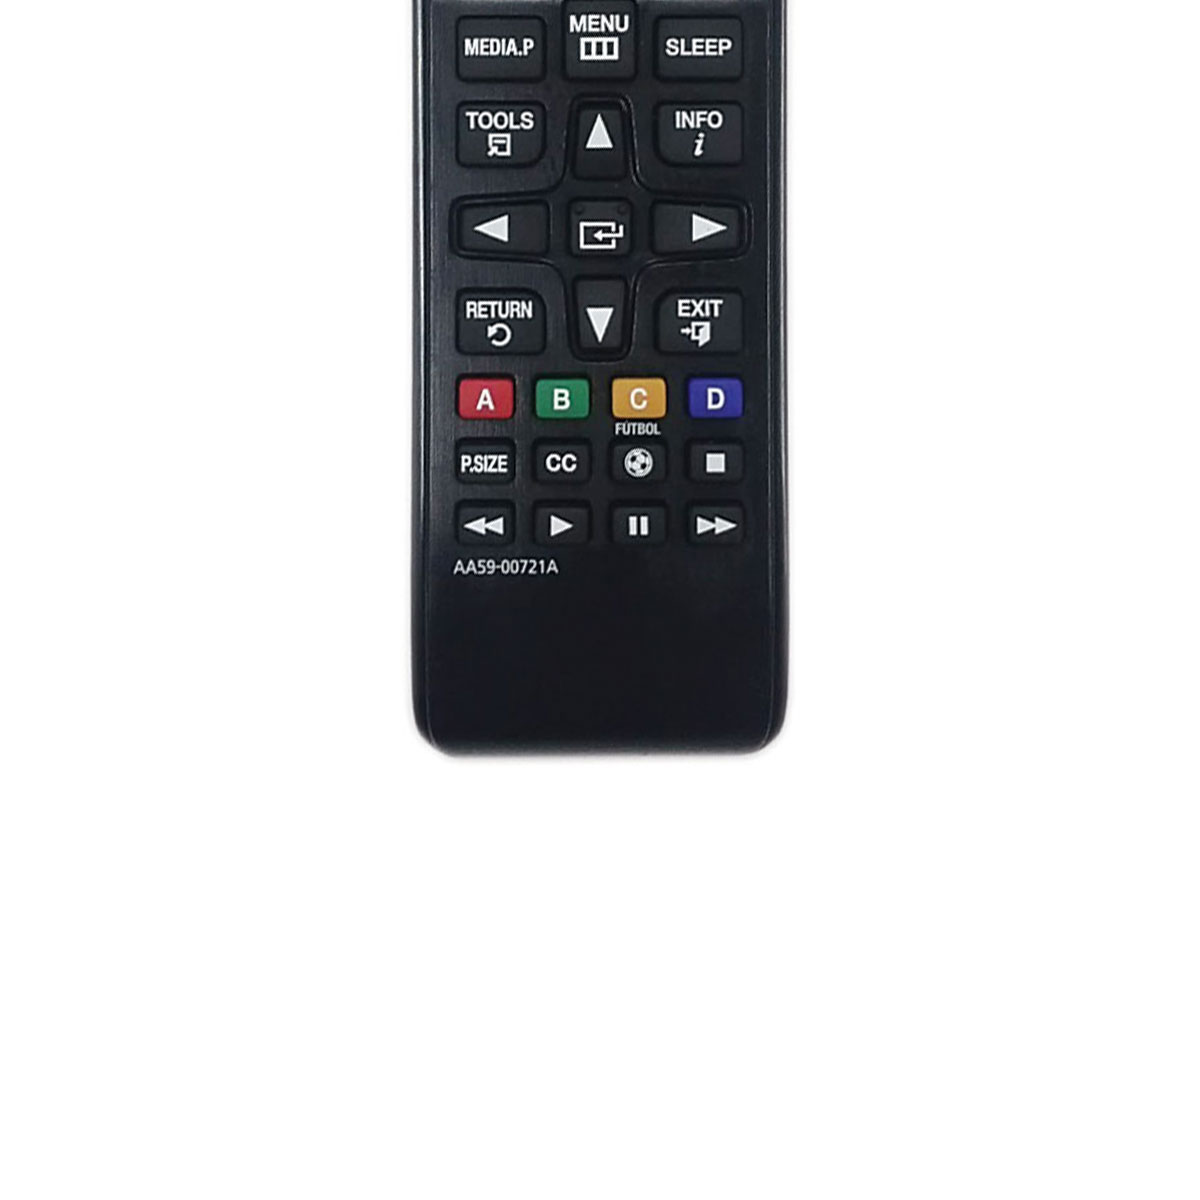 AuraBeam Replacement TV Remote Control for Samsung UN43JU640DF Television